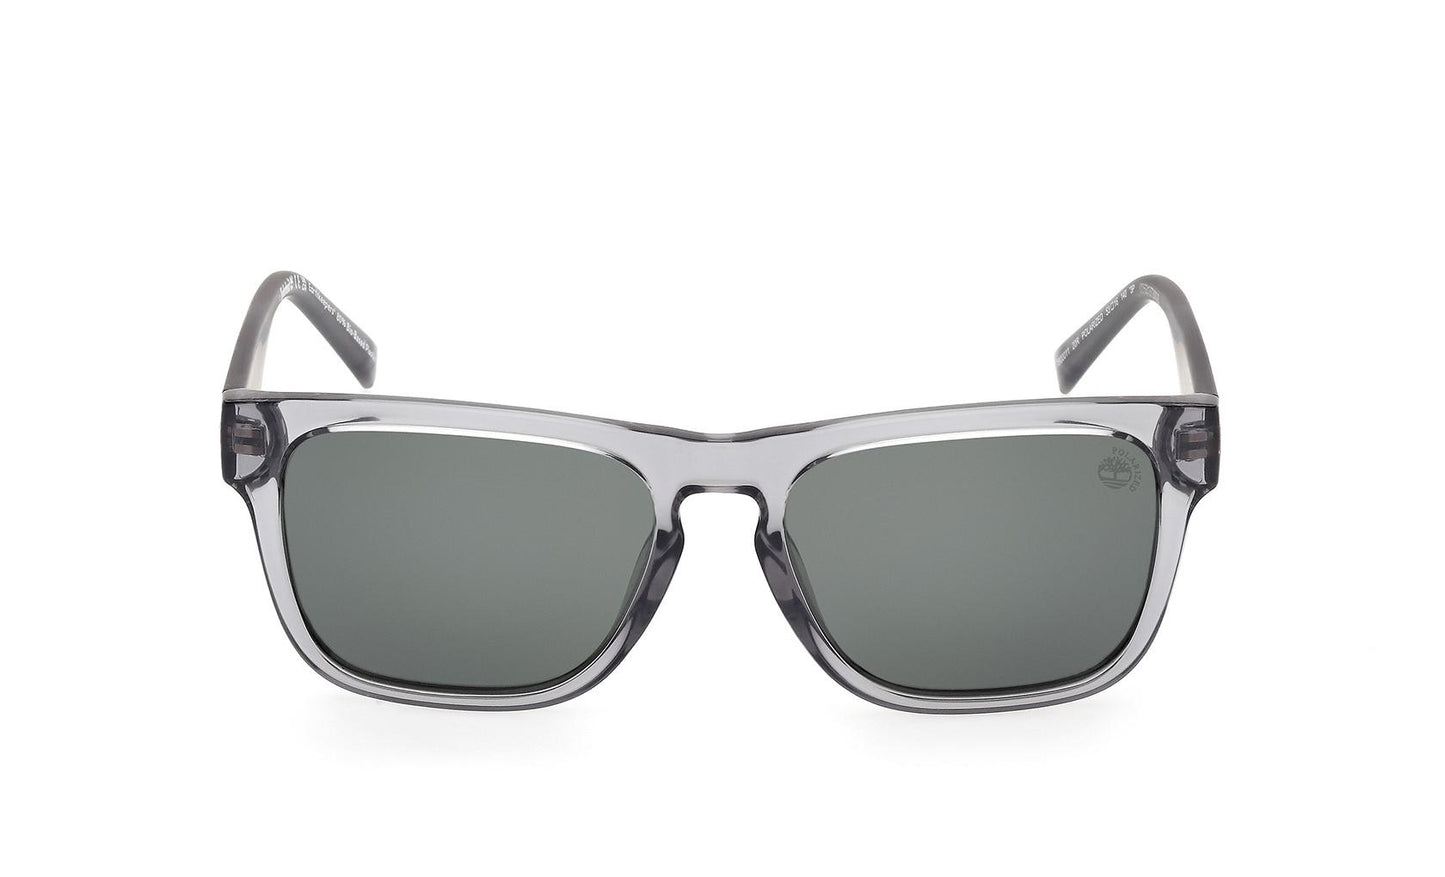 Timberland Sunglasses TB00011 20R